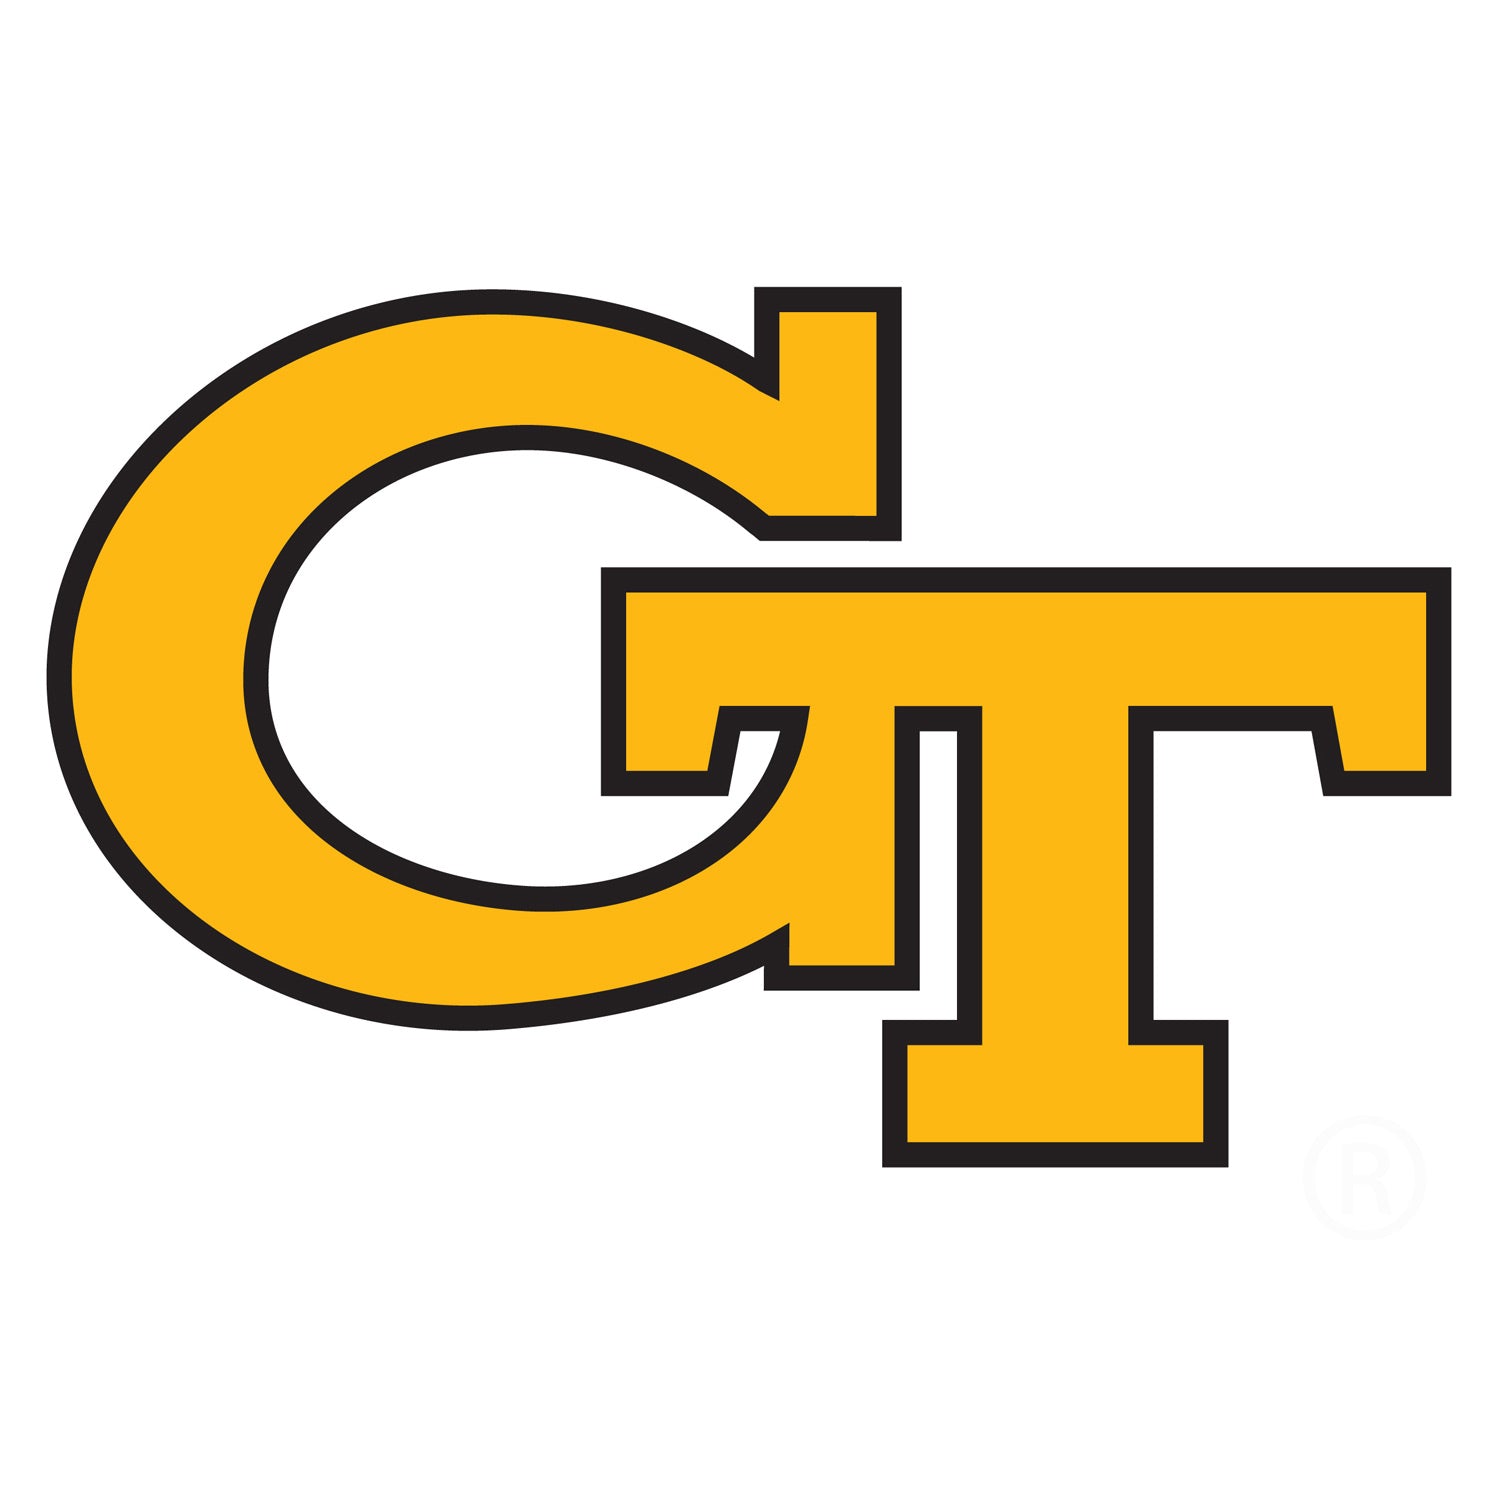 Team Golf NCAA Georgia Tech Yellow Jackets